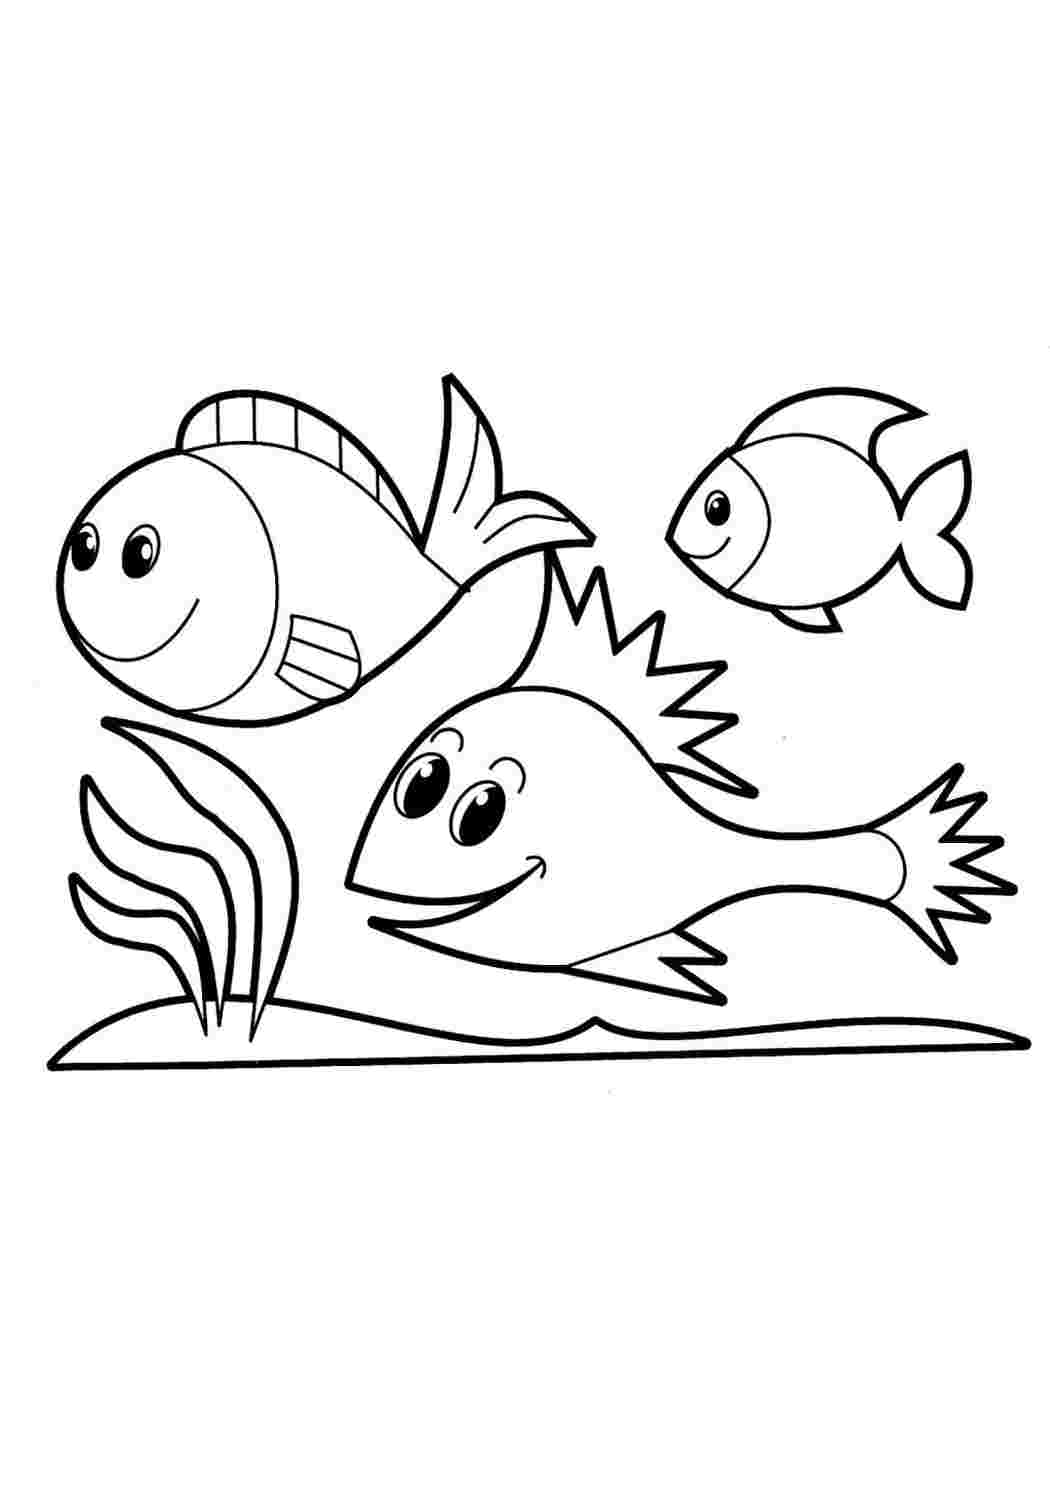 Раскраски рыбки животные. Раскраски в формате А4. рыбки животные. Распечатать раскраски.